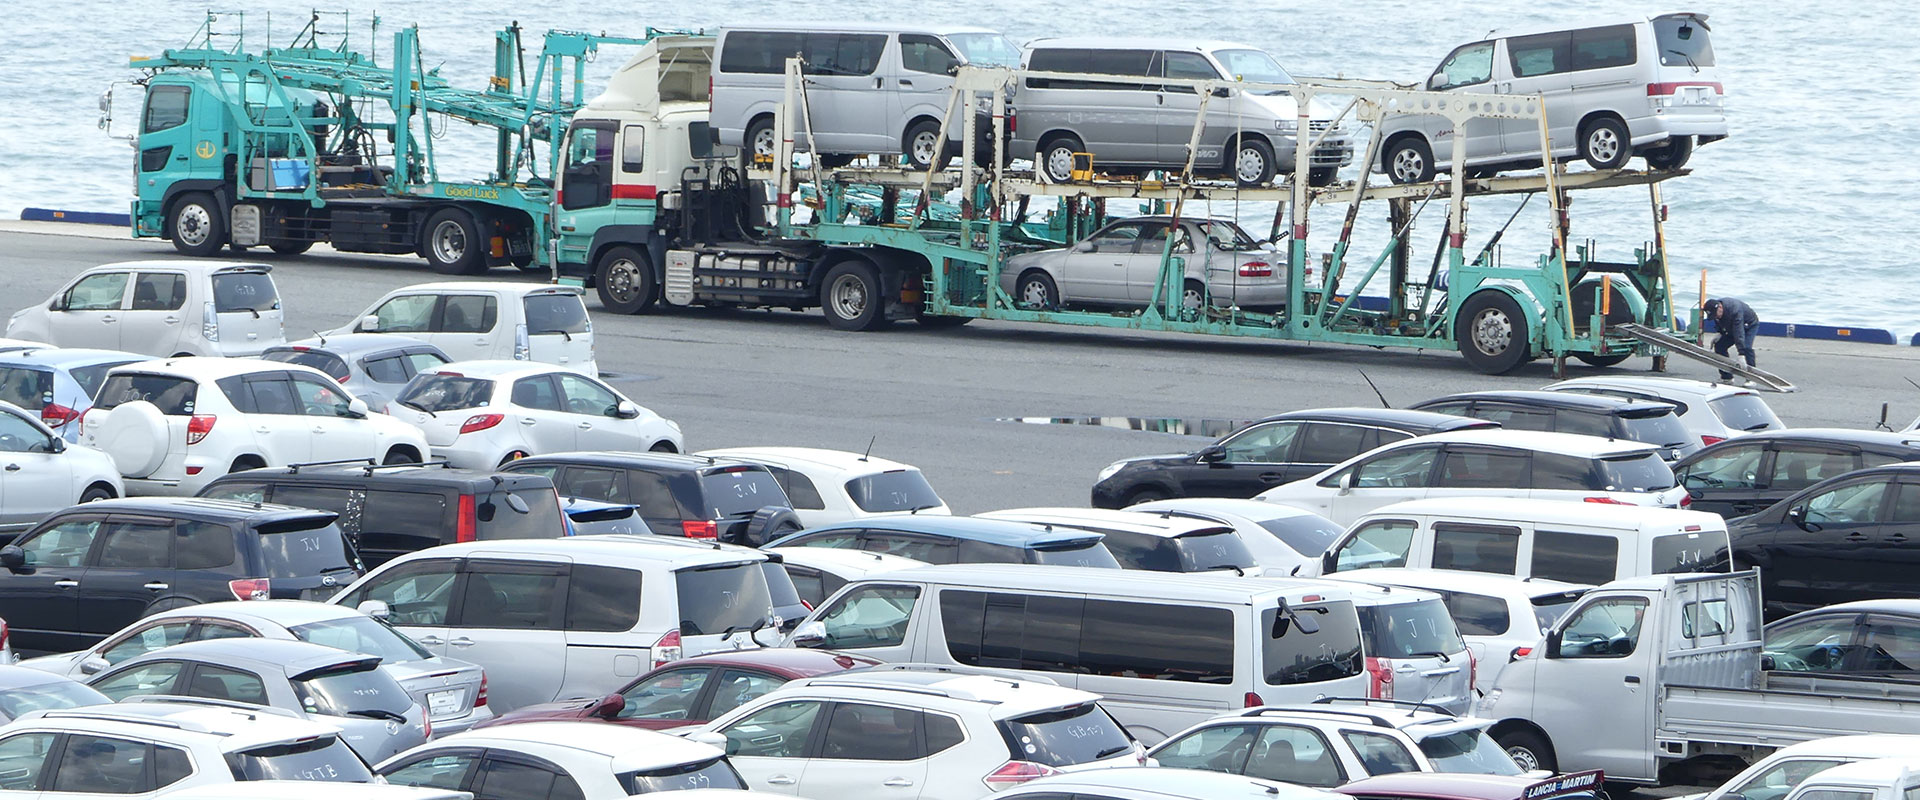 Car transporter truck at port in Japan